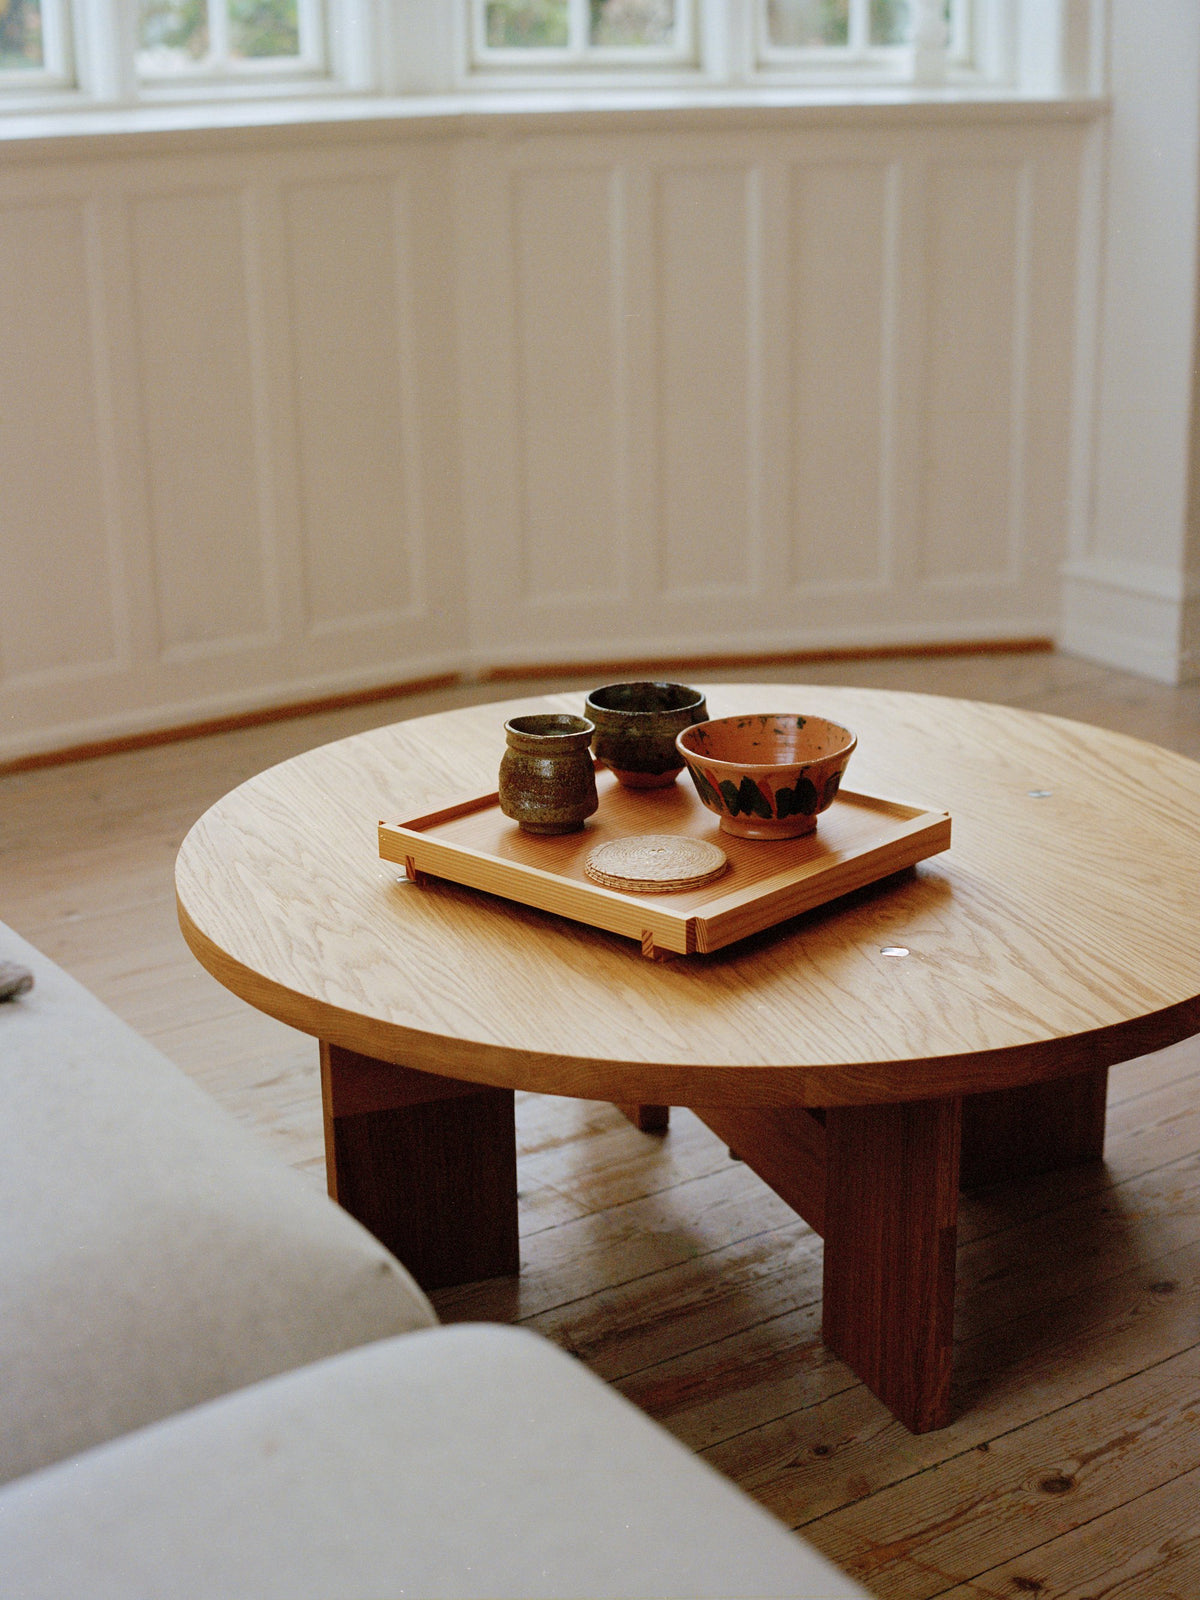 Mio Coffee Table by Thorup Copenhagen